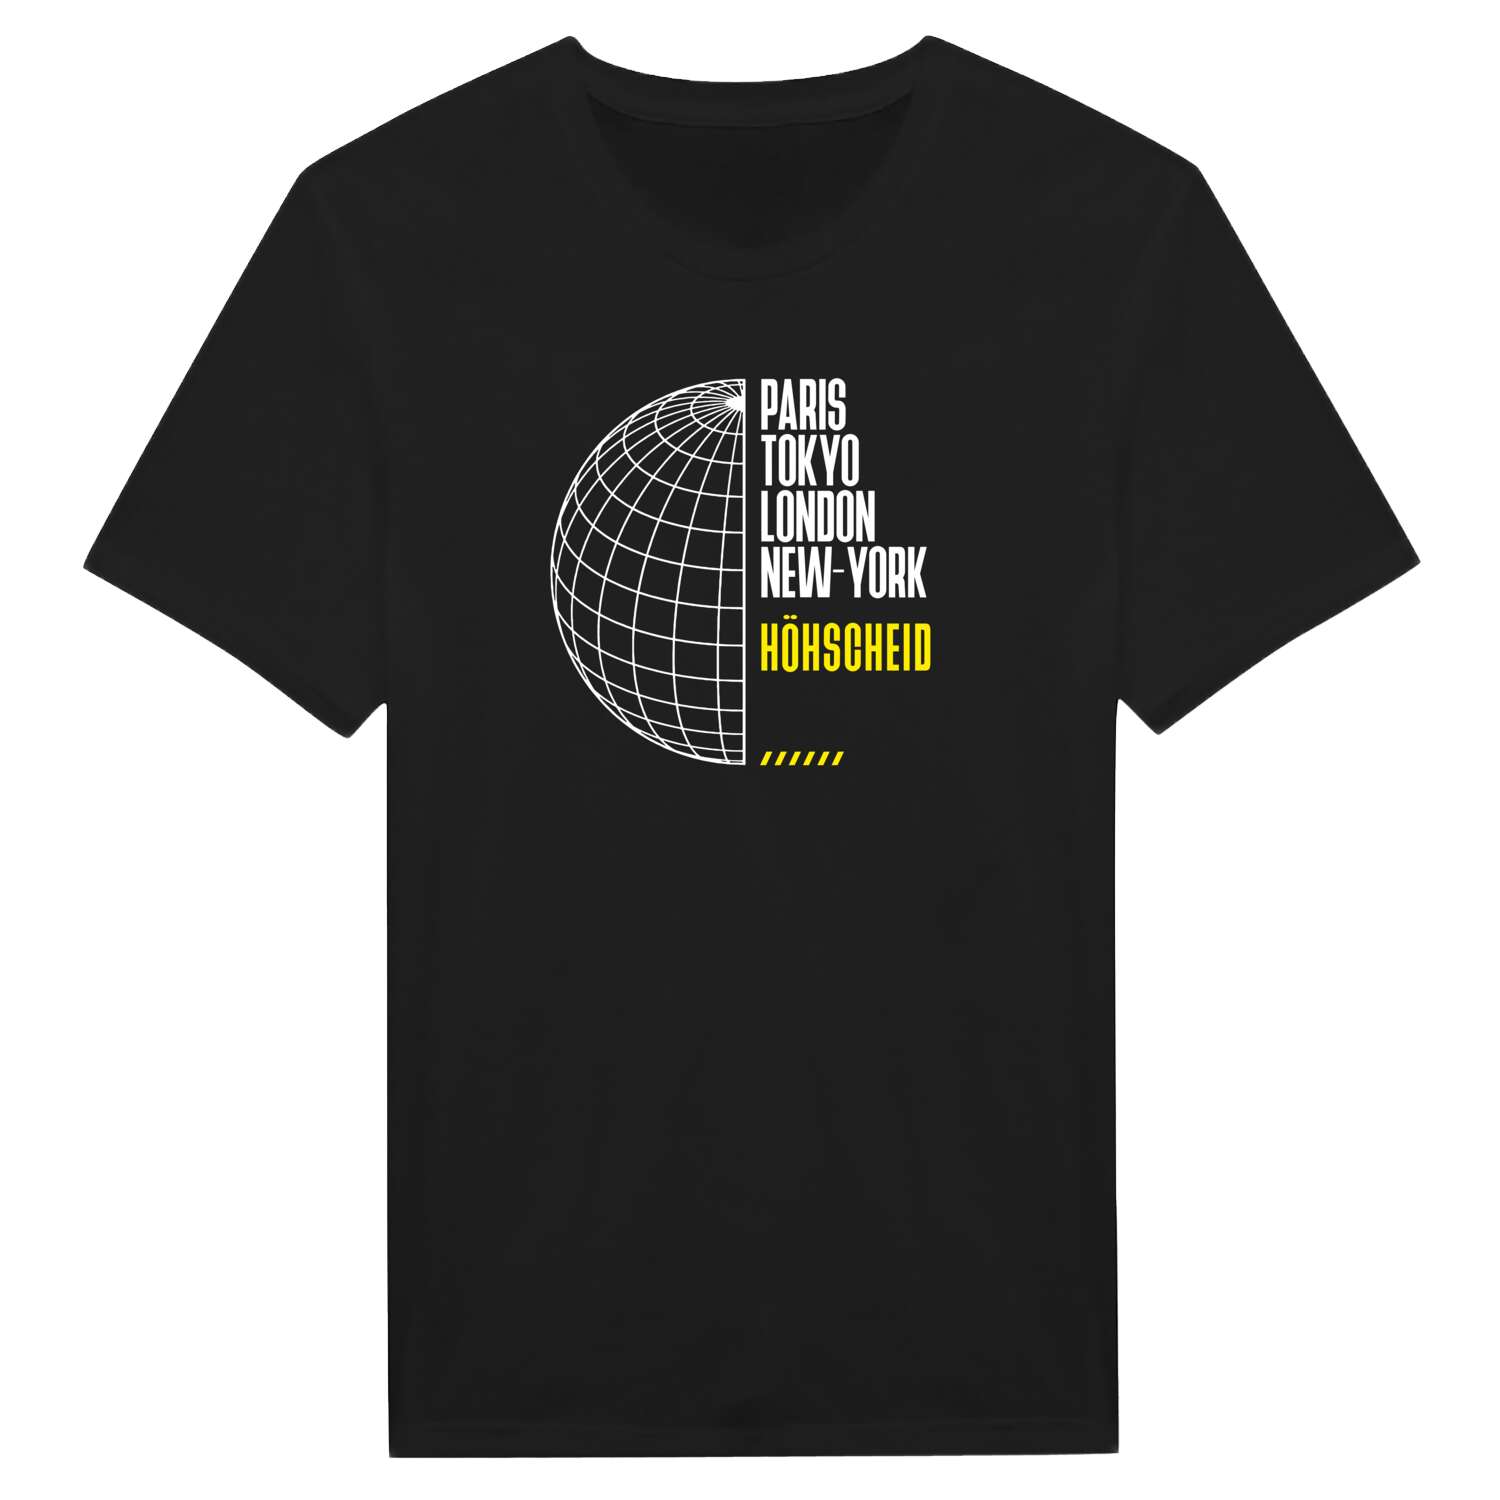 Höhscheid T-Shirt »Paris Tokyo London«